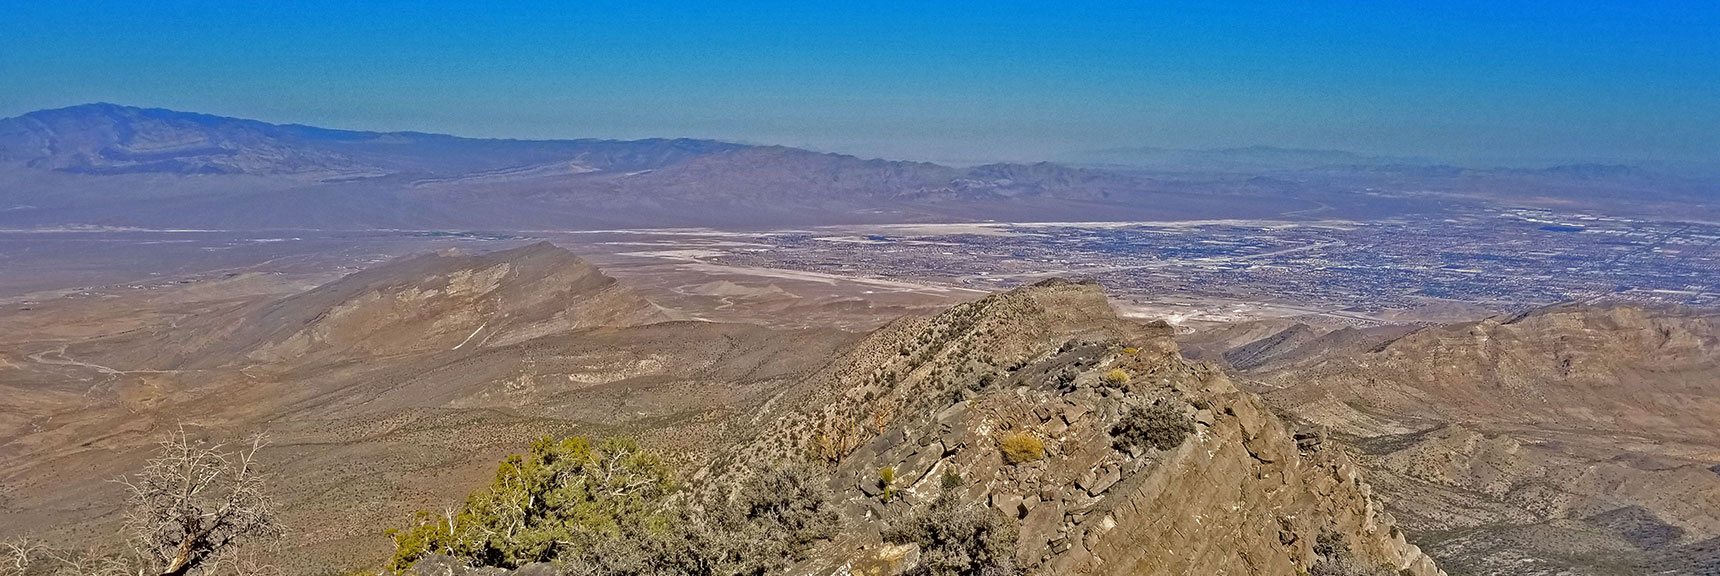 Centennial Hills, Gass Peak, Fossil Ridge and Sheep Range | La Madre Mountain,, El Padre Mountain, Burnt Peak | La Madre Mountains Wilderness, Nevada